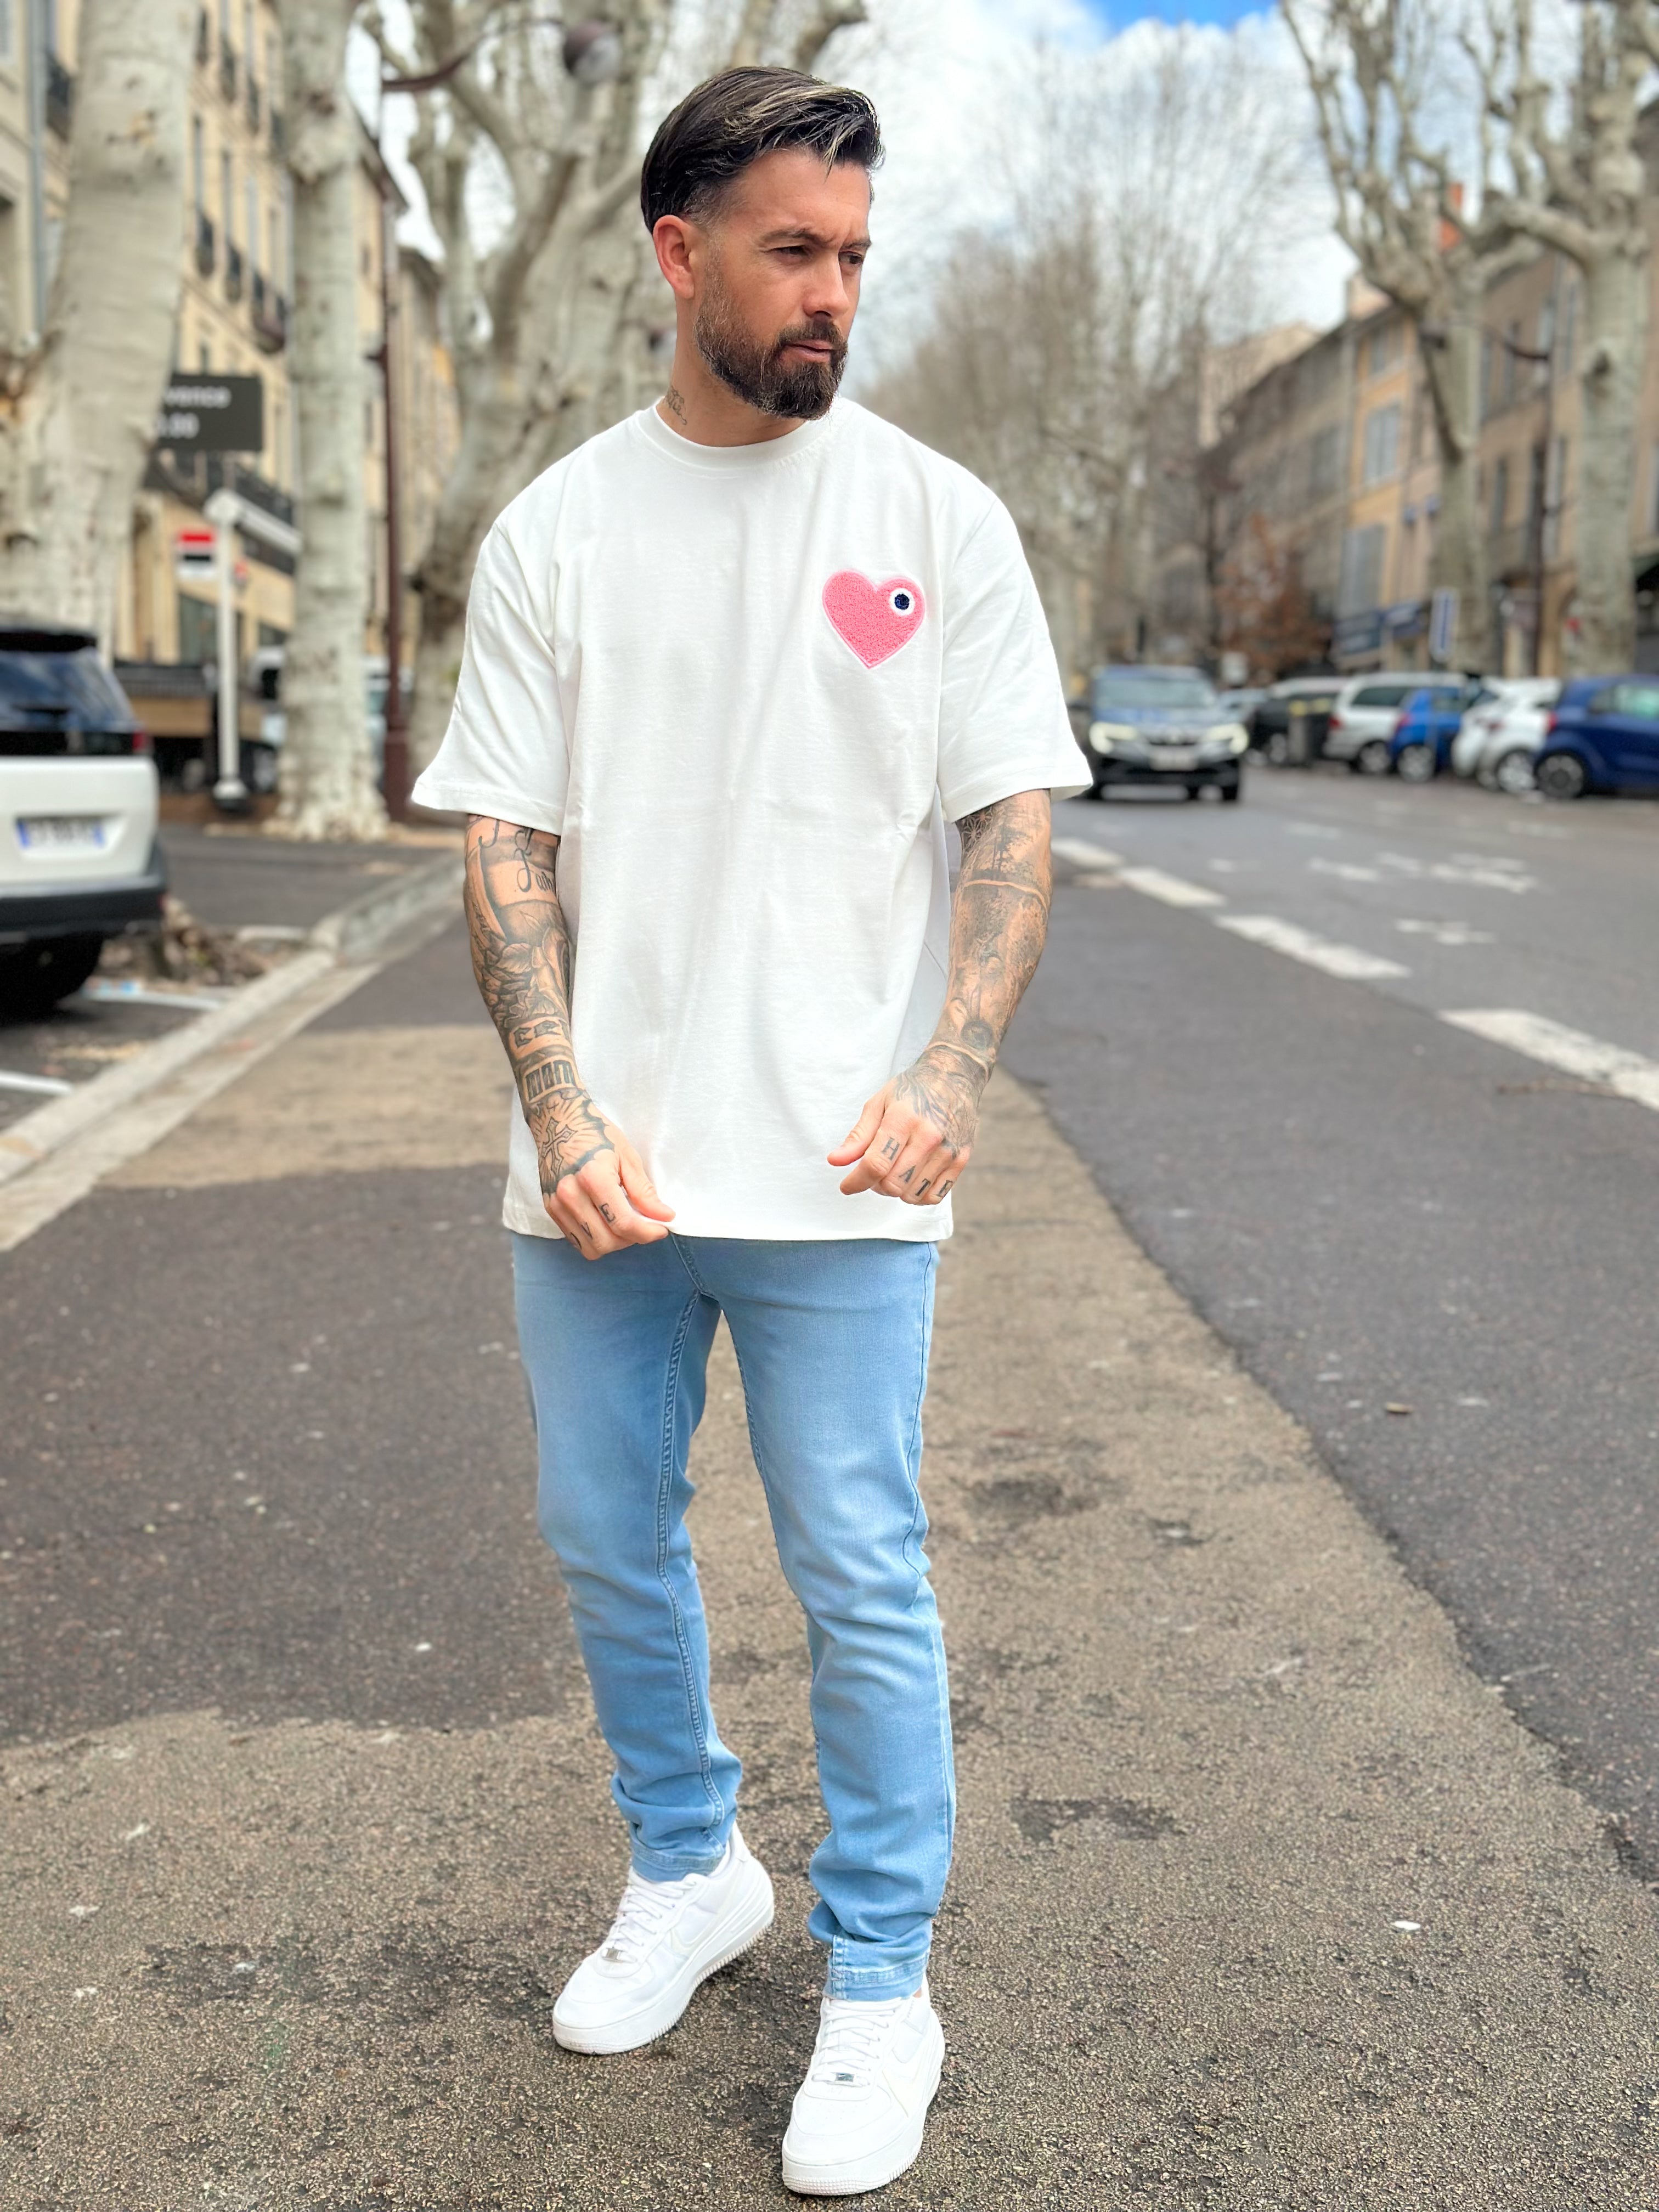 ADJ - T-shirt blanc coeur rose